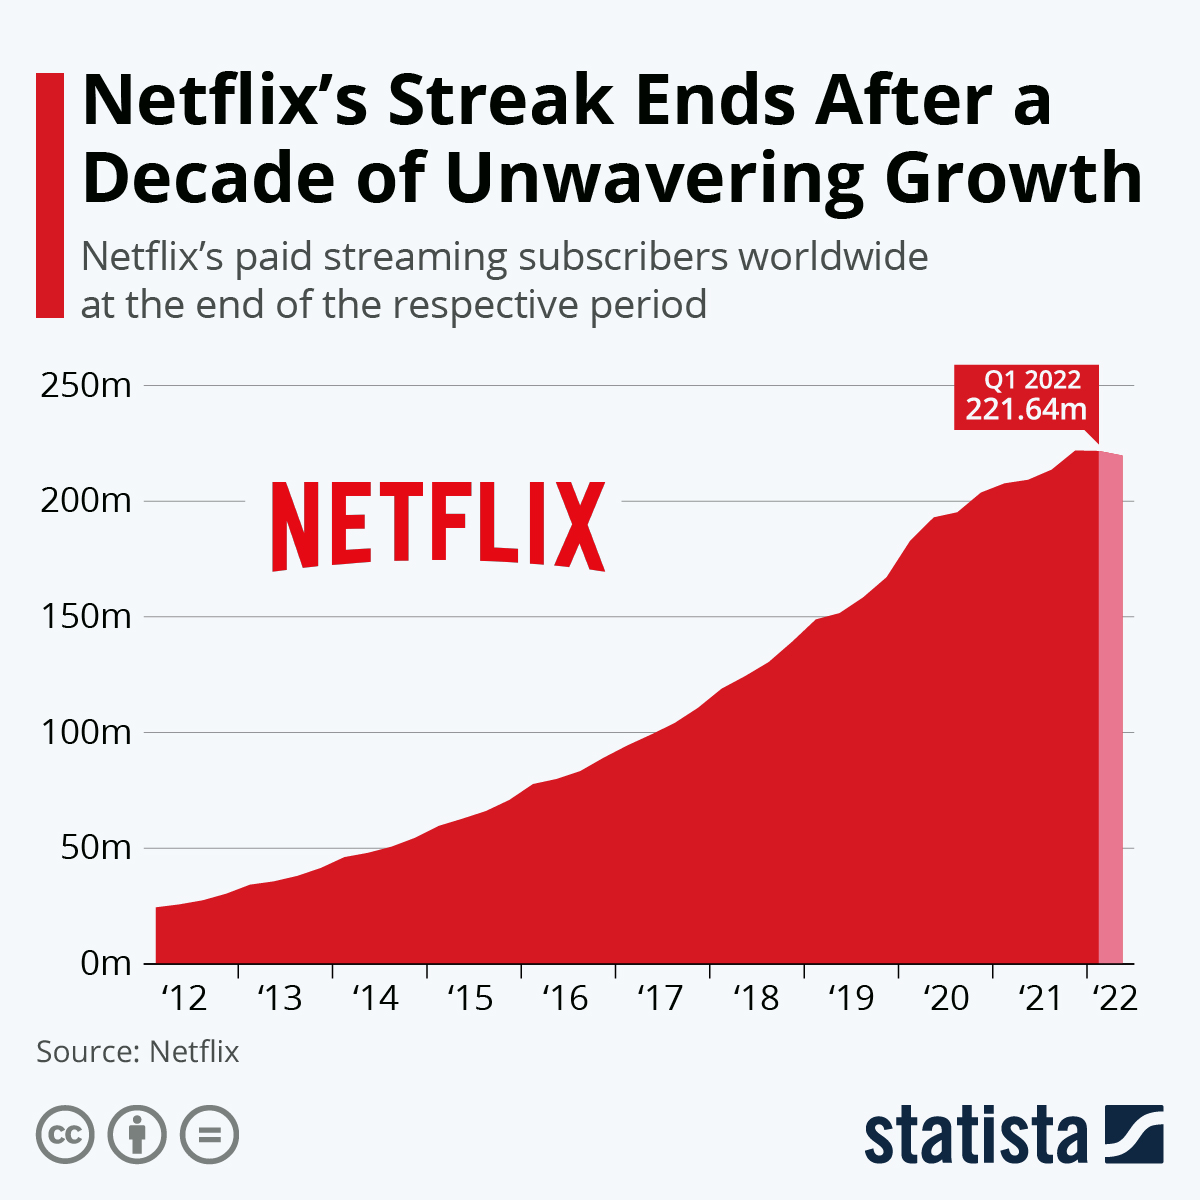 Netflix's Streak Ends After a Decade of Unwavering Growth